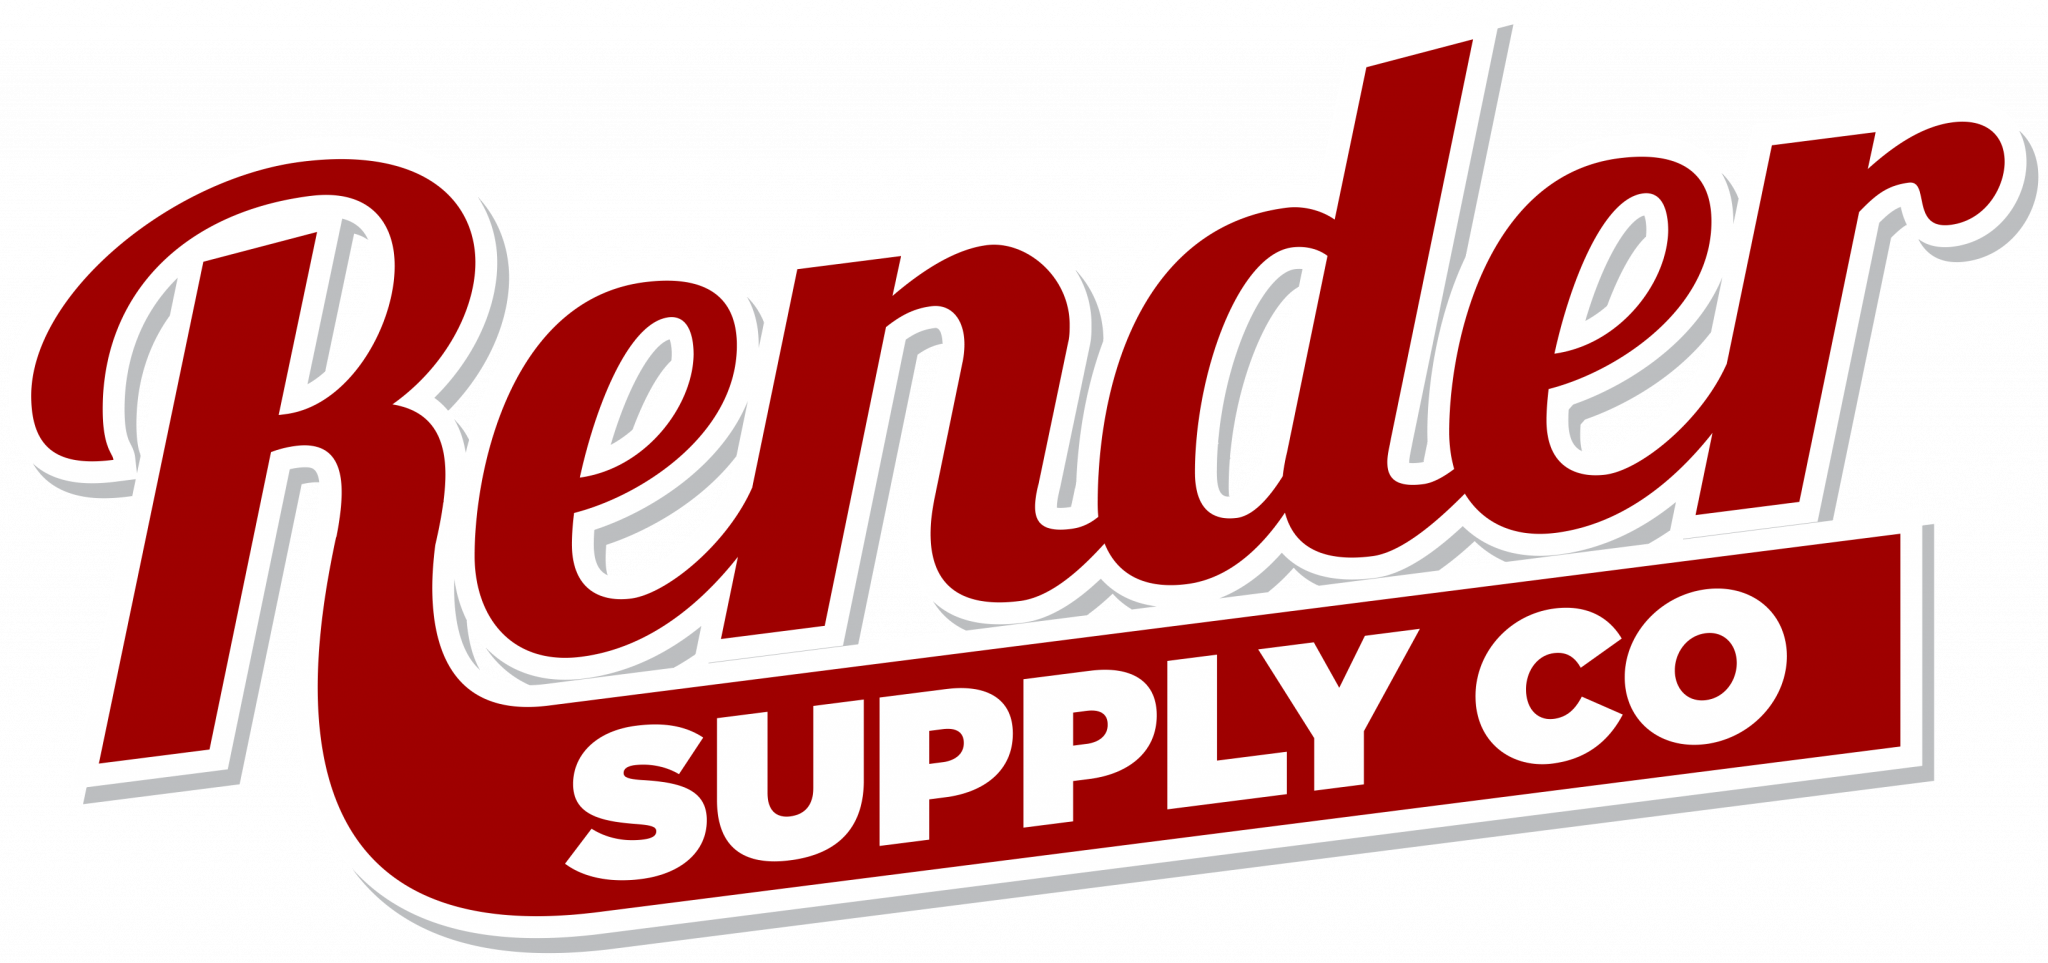 Render Supply Co